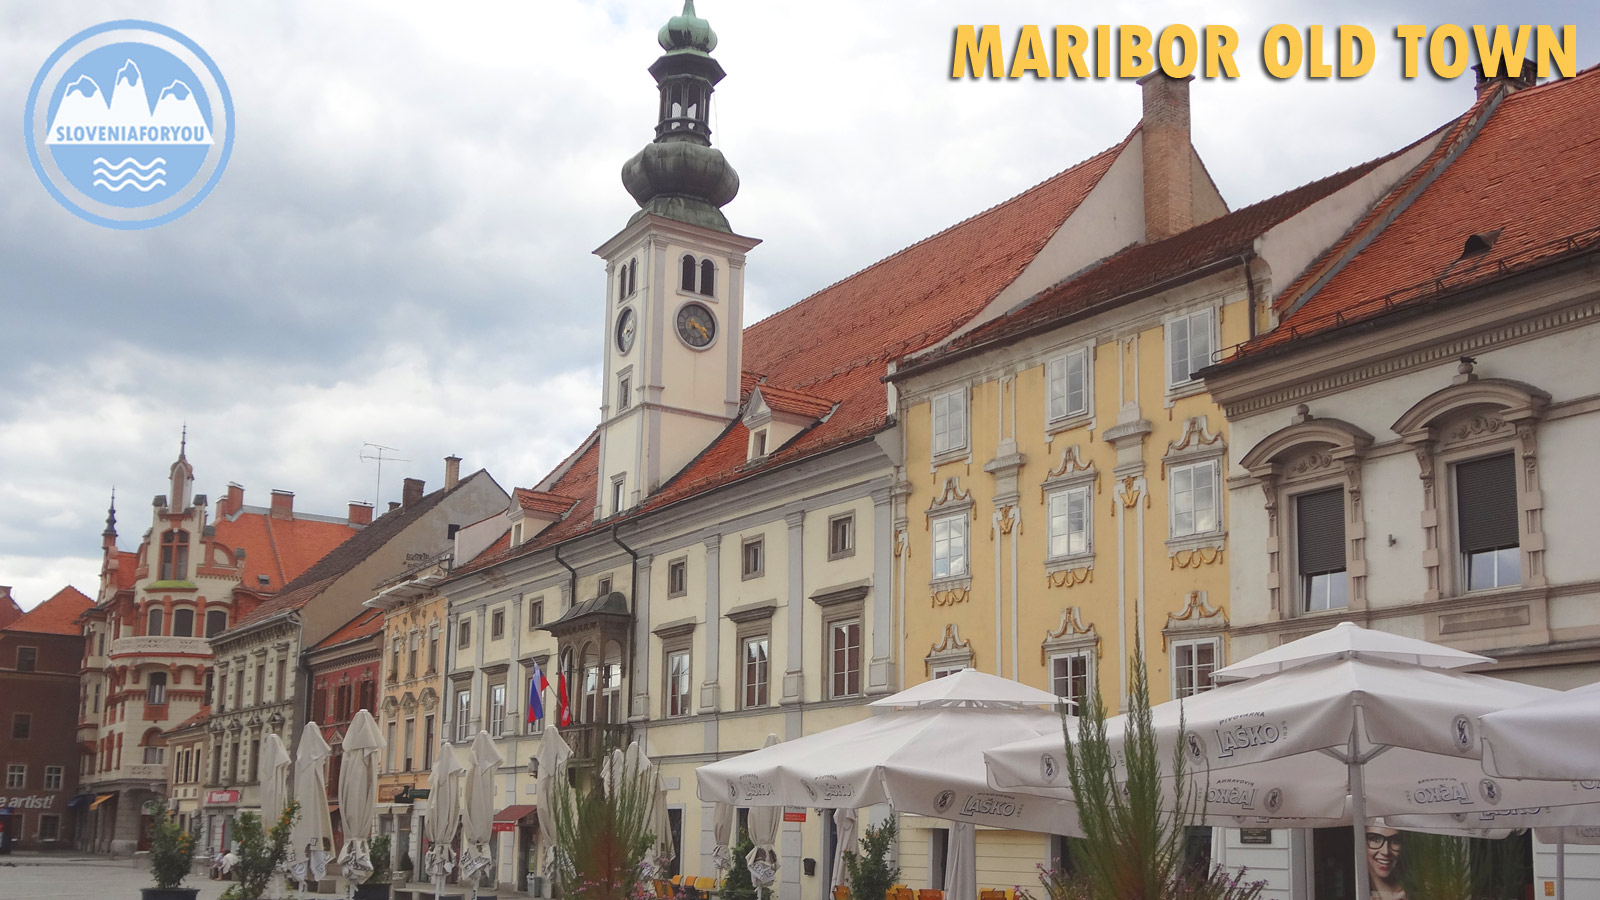 Maribor Old Town - Sloveniaforyou